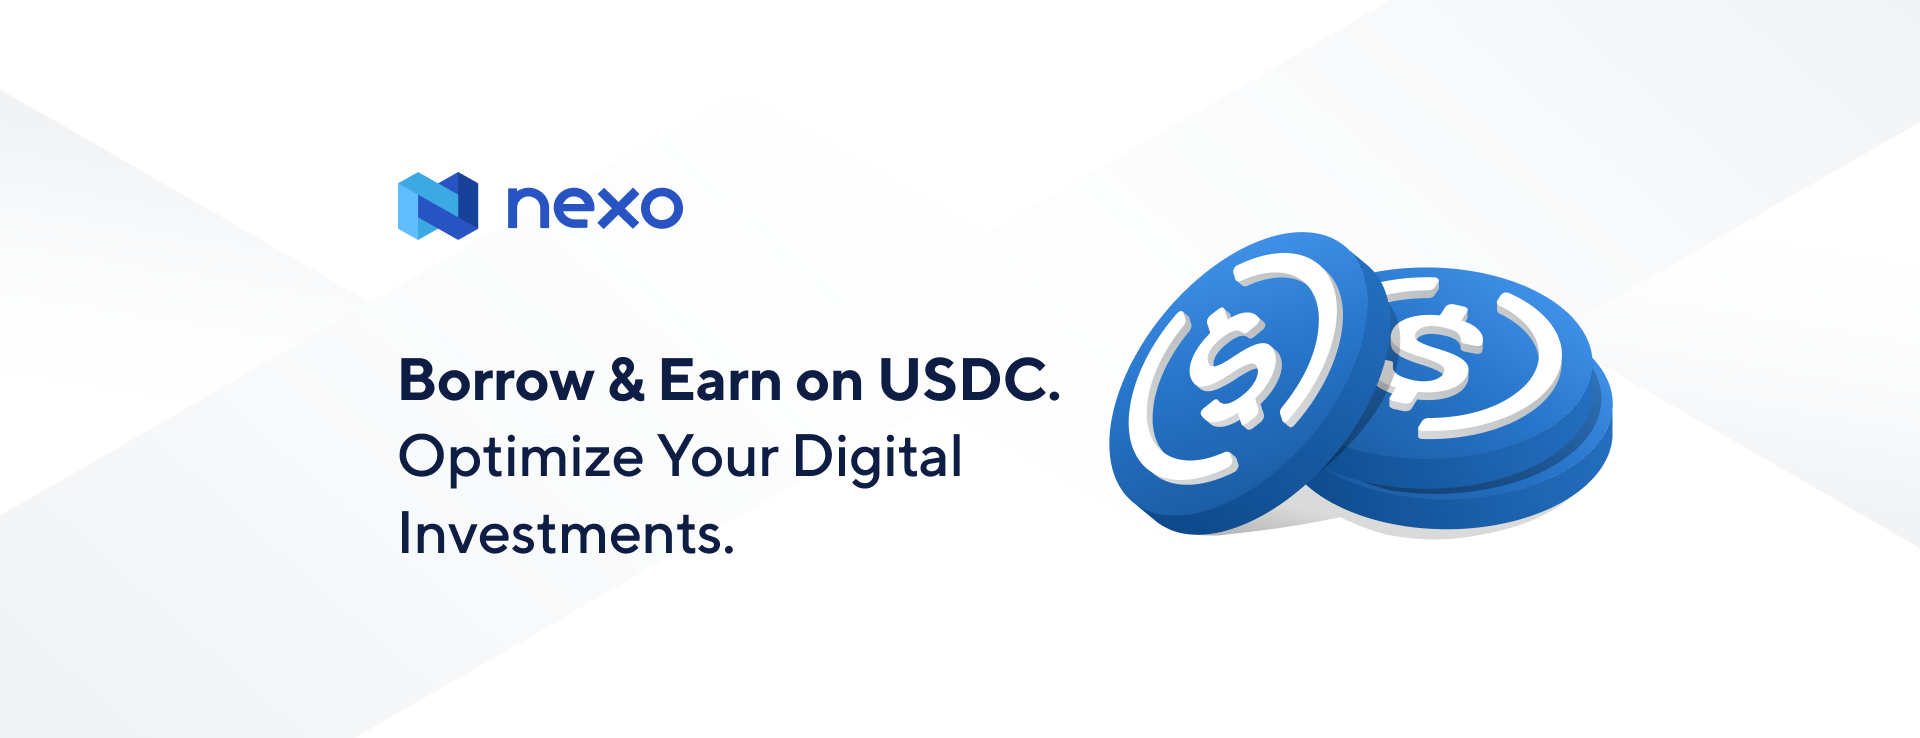 Borrow & Earn on USDC. Optimize Your Digital Investments.